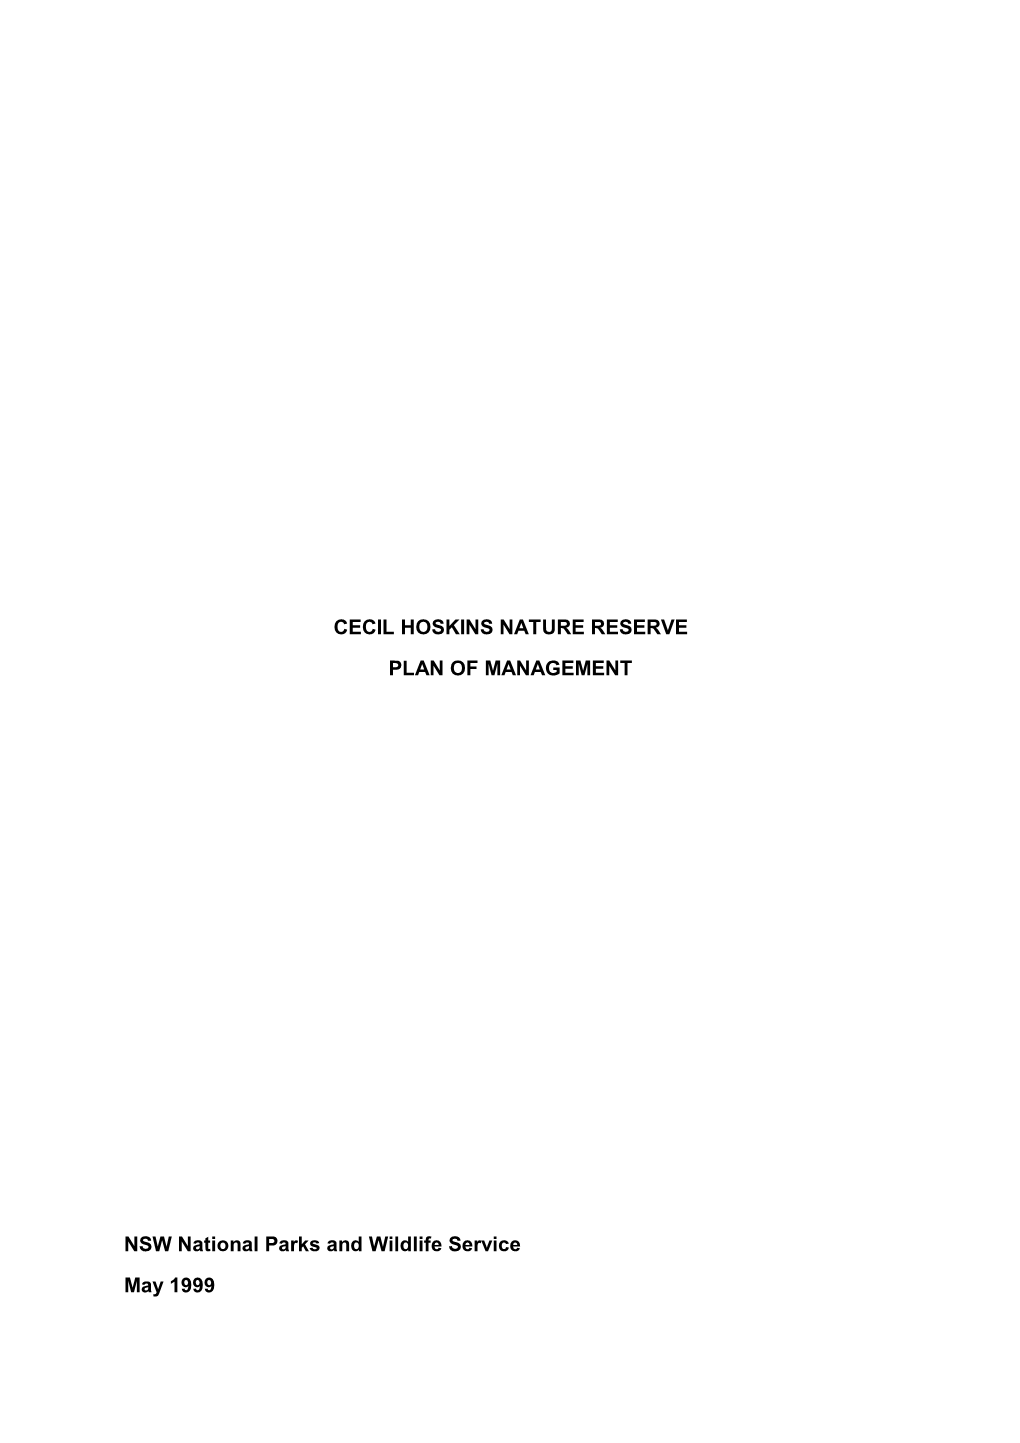 Cecil Hoskins Nature Reserve Plan of Management